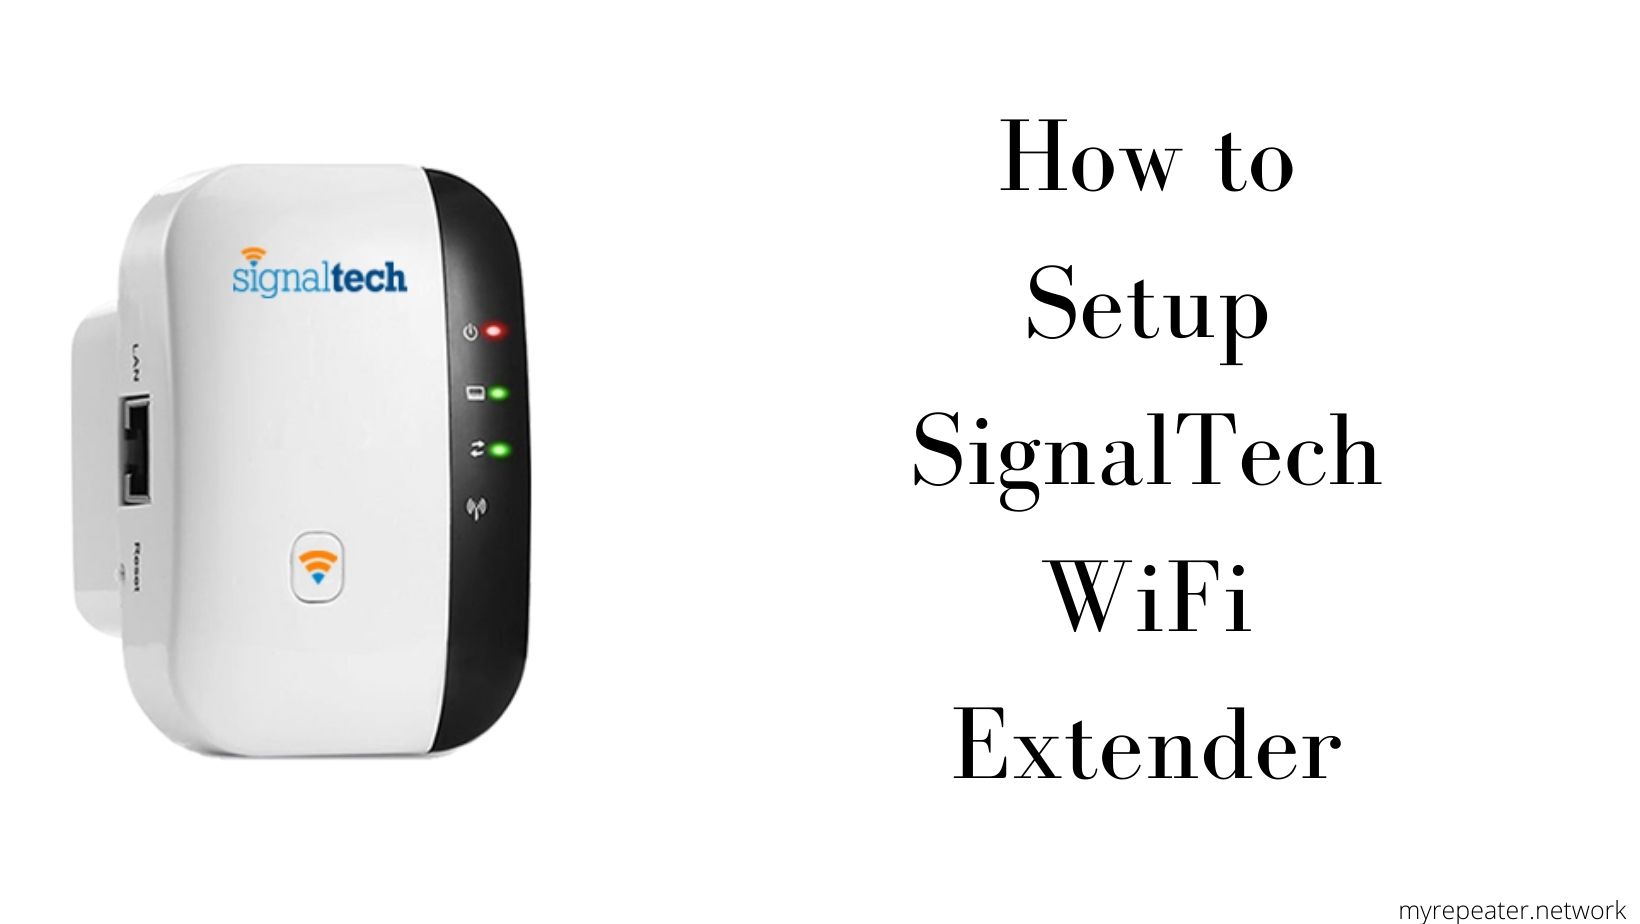 How to Setup SignalTech WiFi Extender